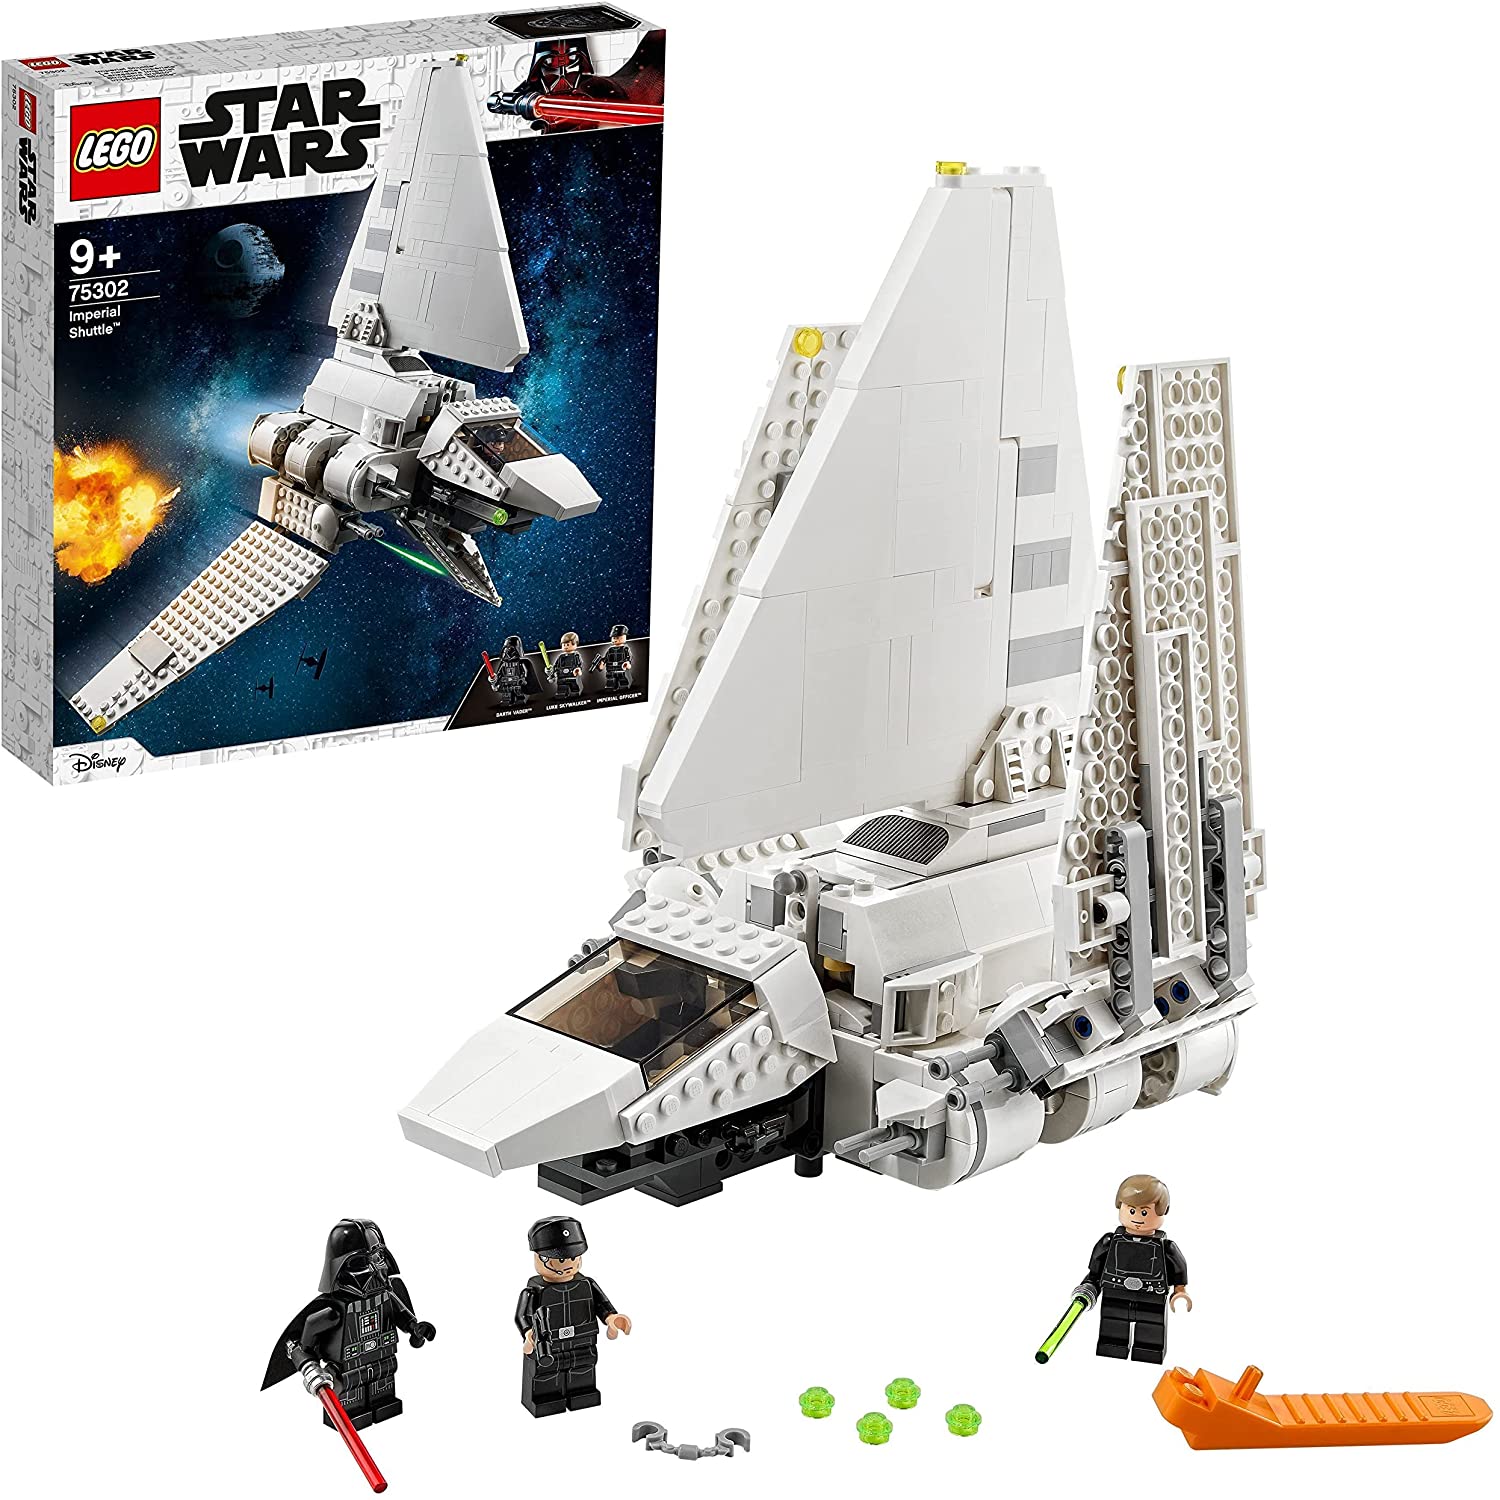 LEGO 75302 Star Wars Imperial Shuttle Construction Kit with Luke Skywalker 